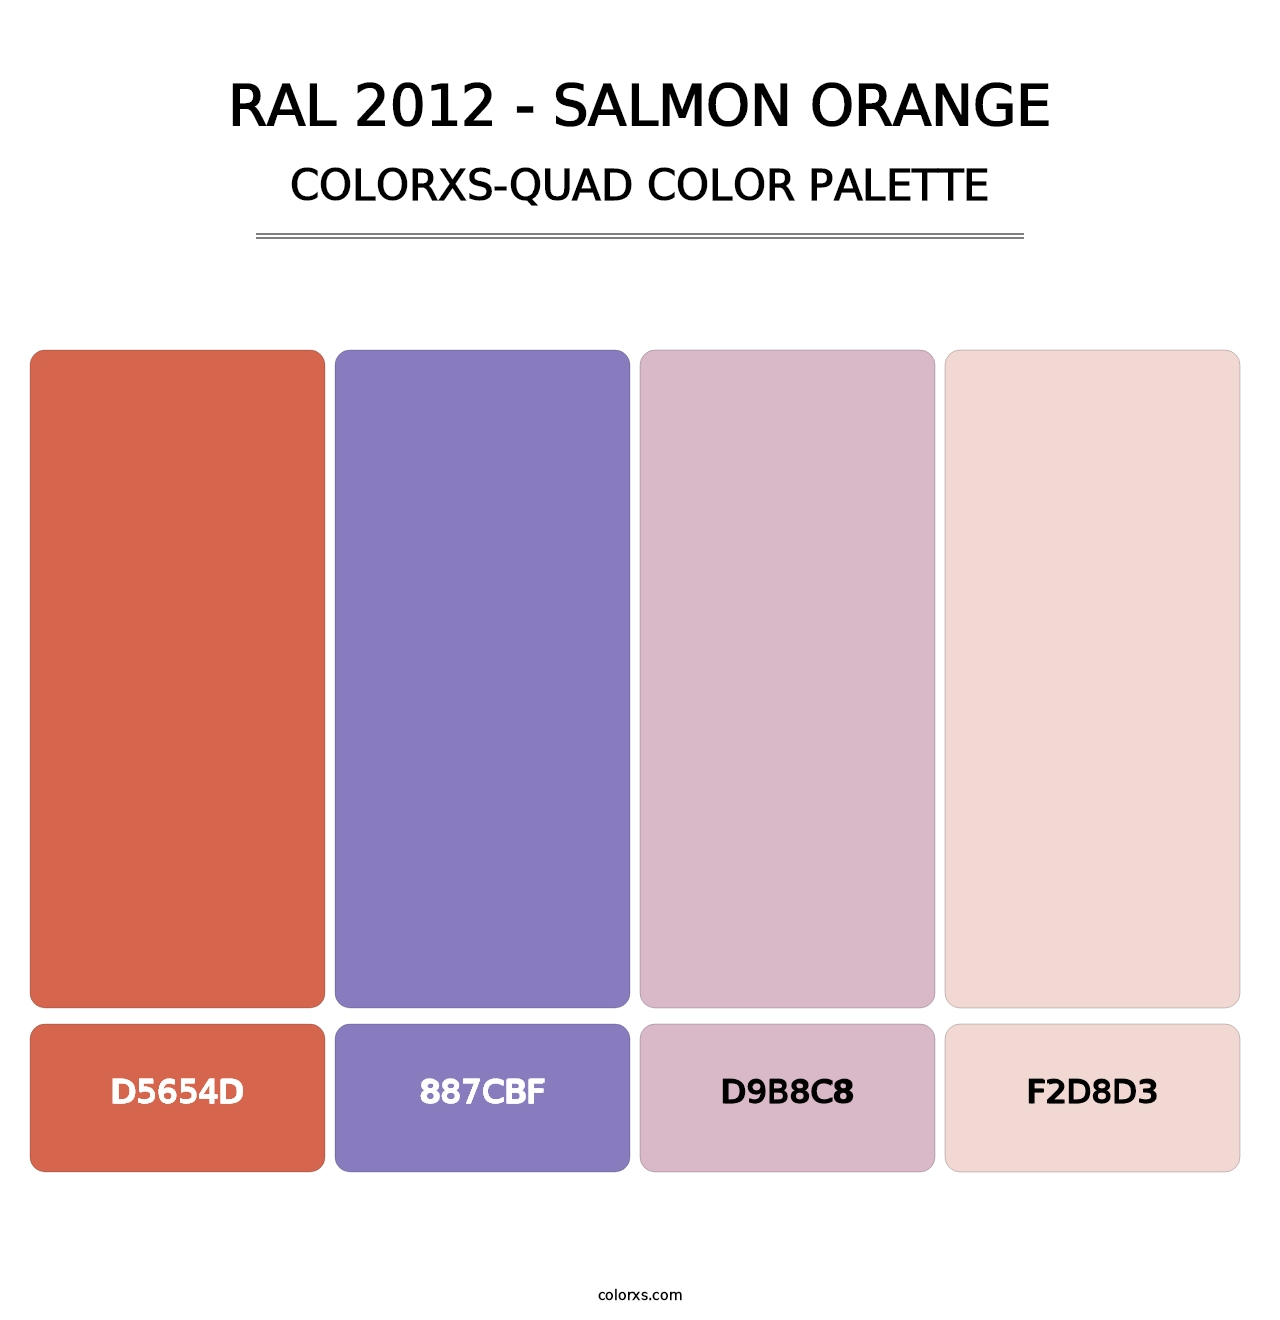 RAL 2012 - Salmon Orange - Colorxs Quad Palette